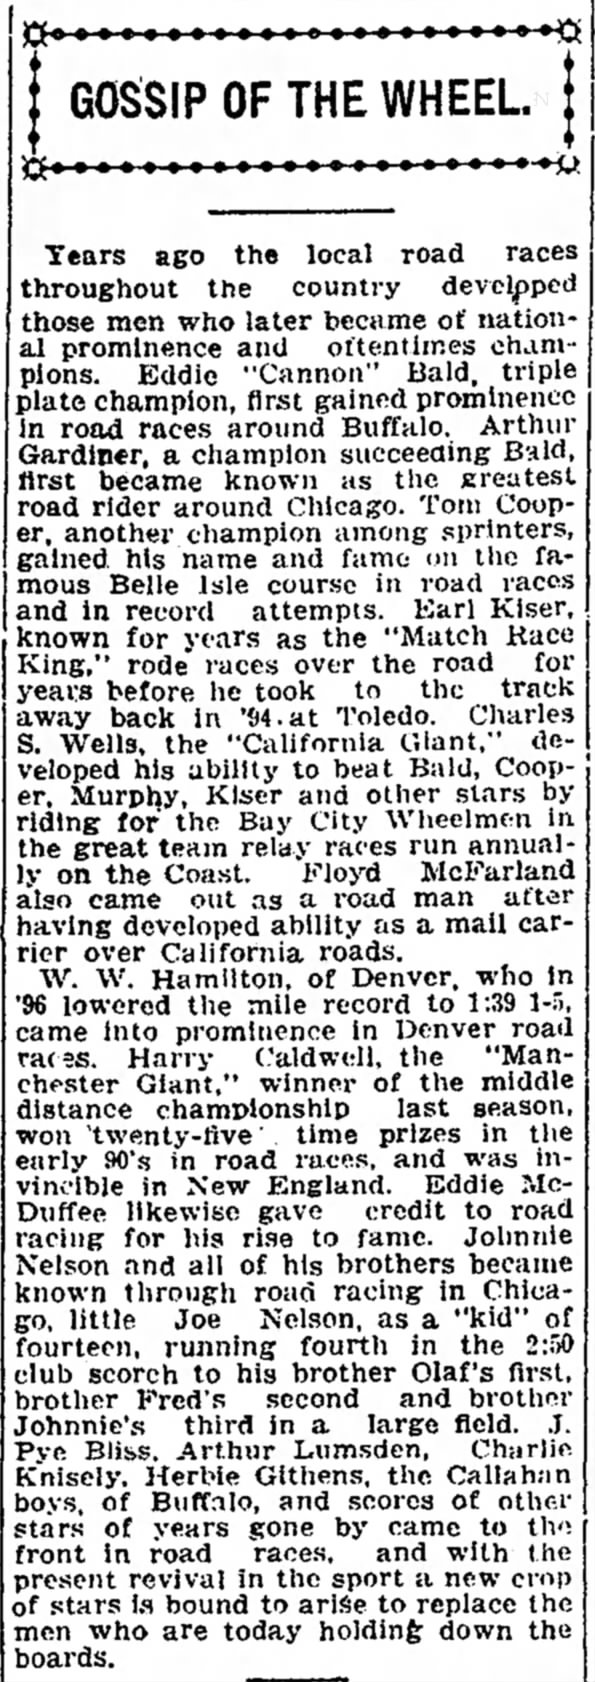 GOSSIP OF THE WHEEL
Charles S. Wells "California Giant"